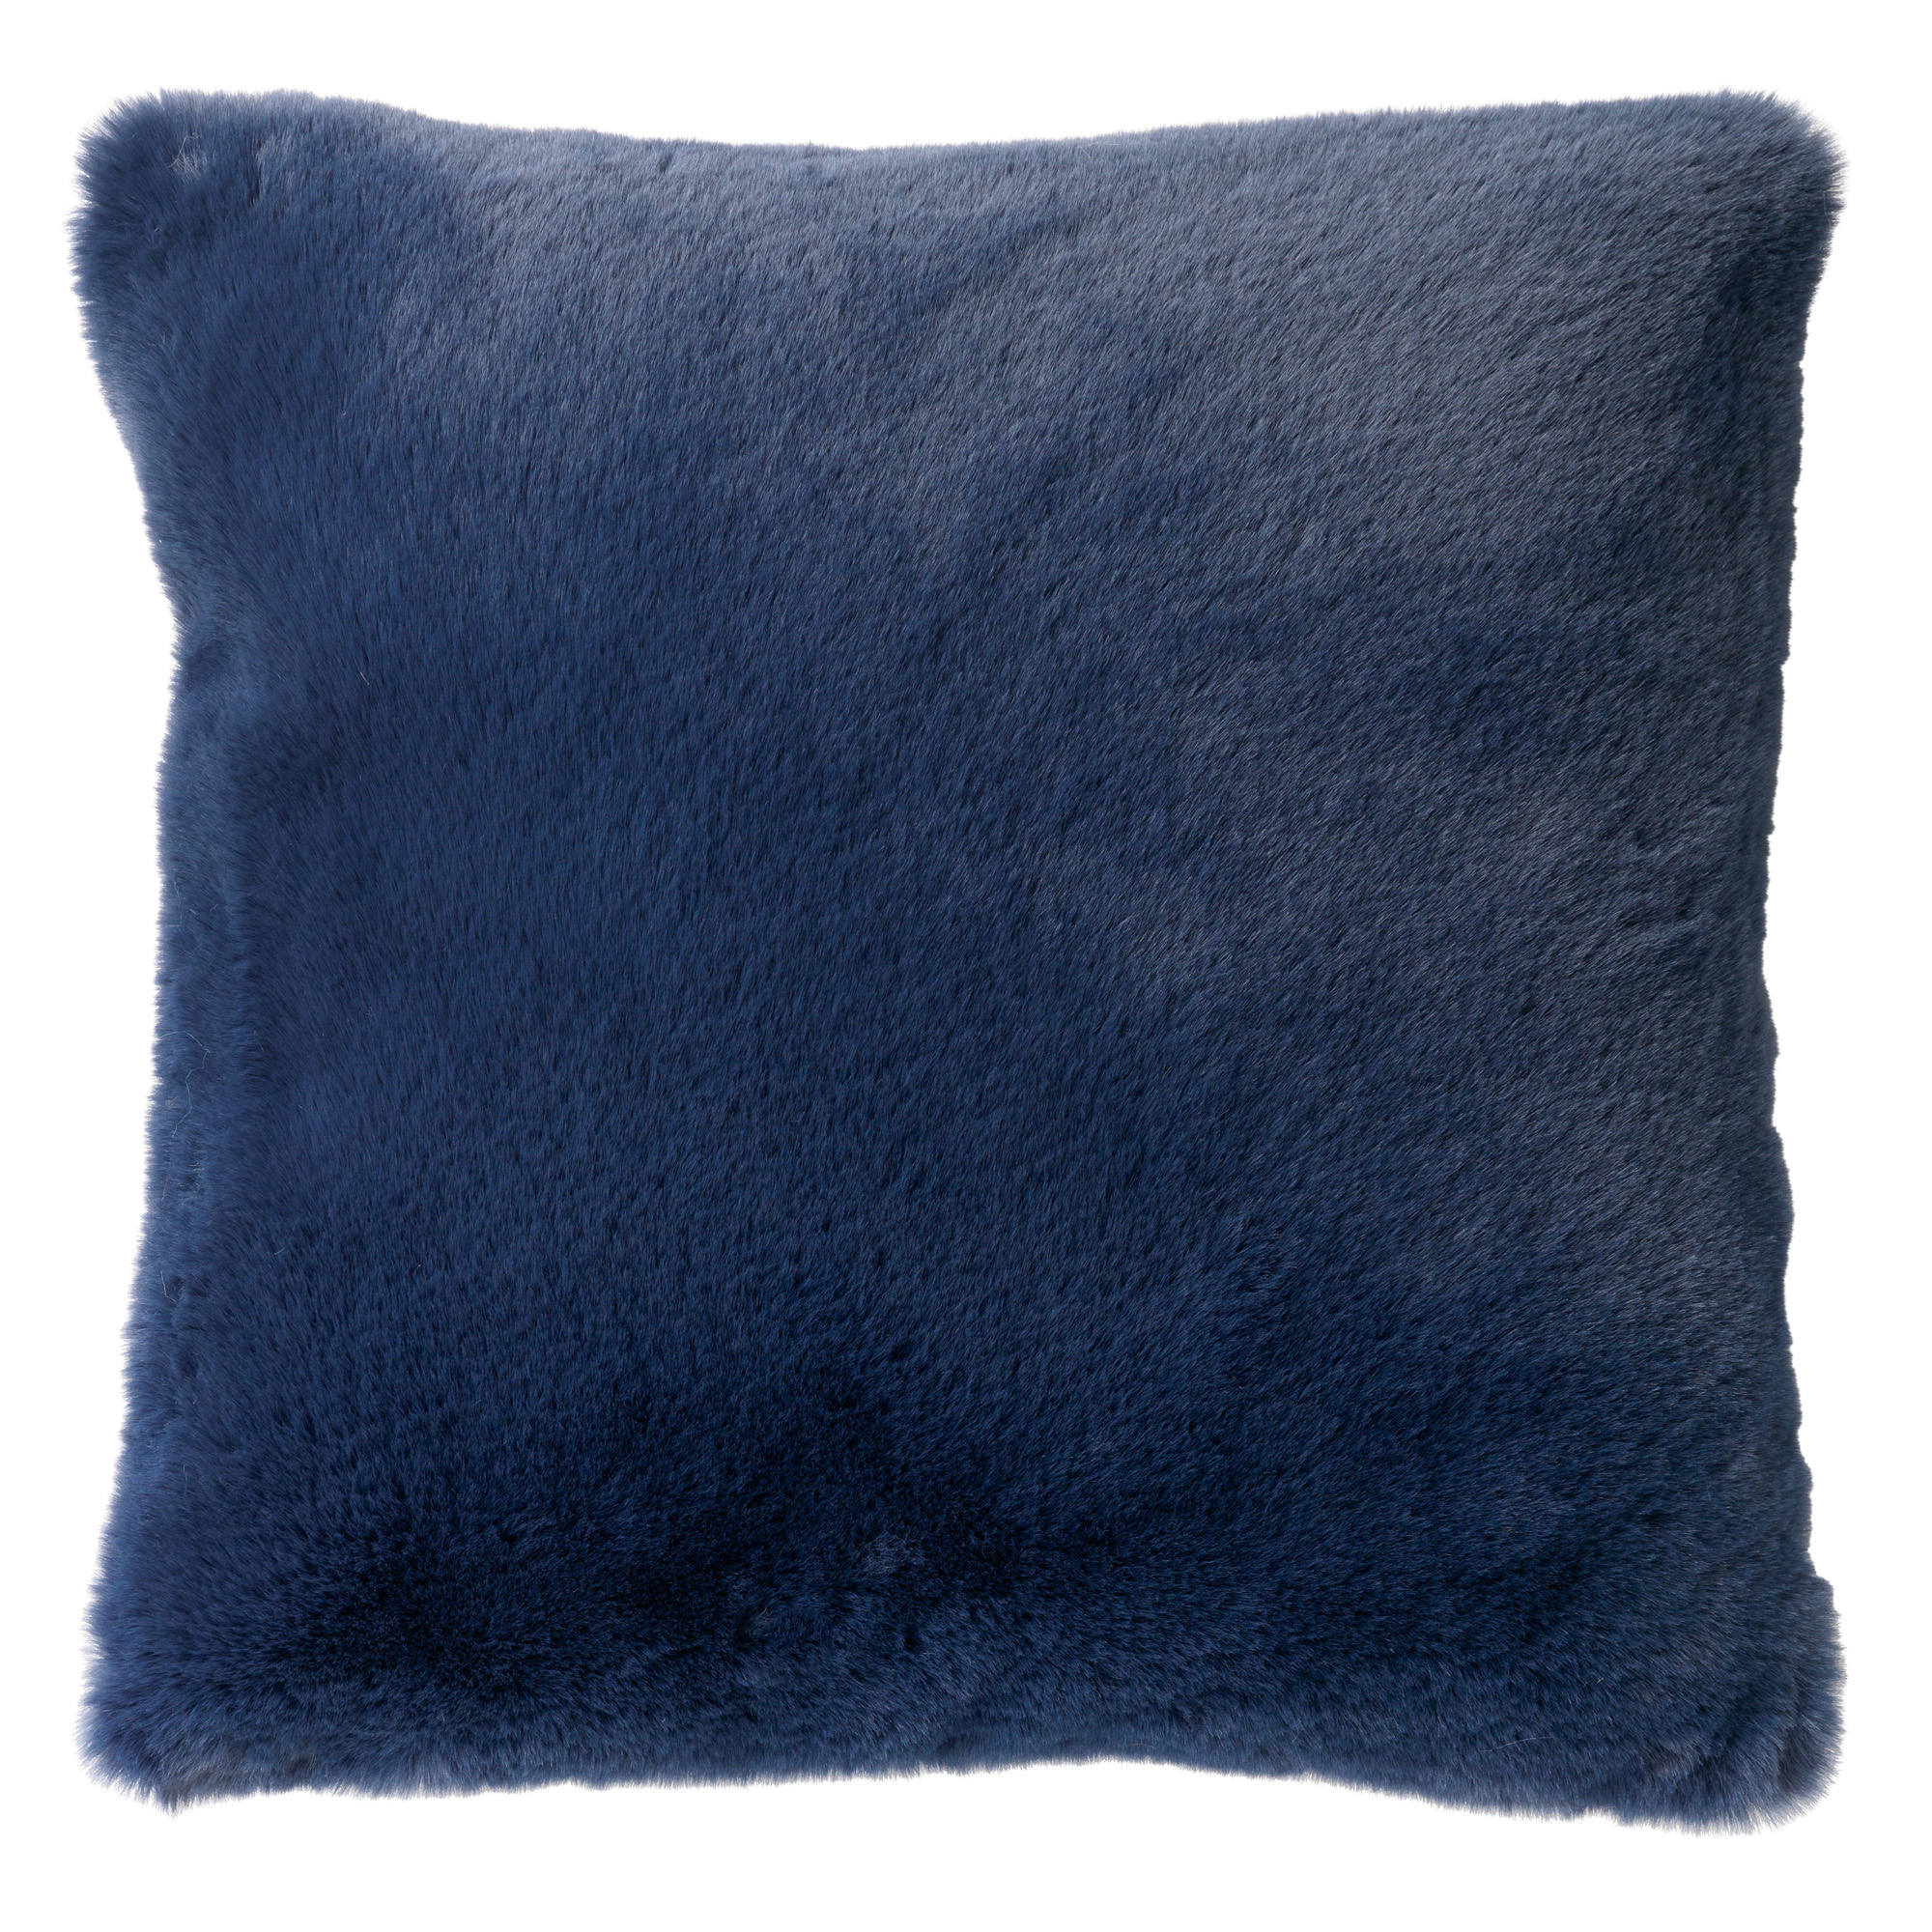 ZAYA - Kussenhoes 60x60 cm - bontlook - effen kleur - Insignia Blue - donkerblauw